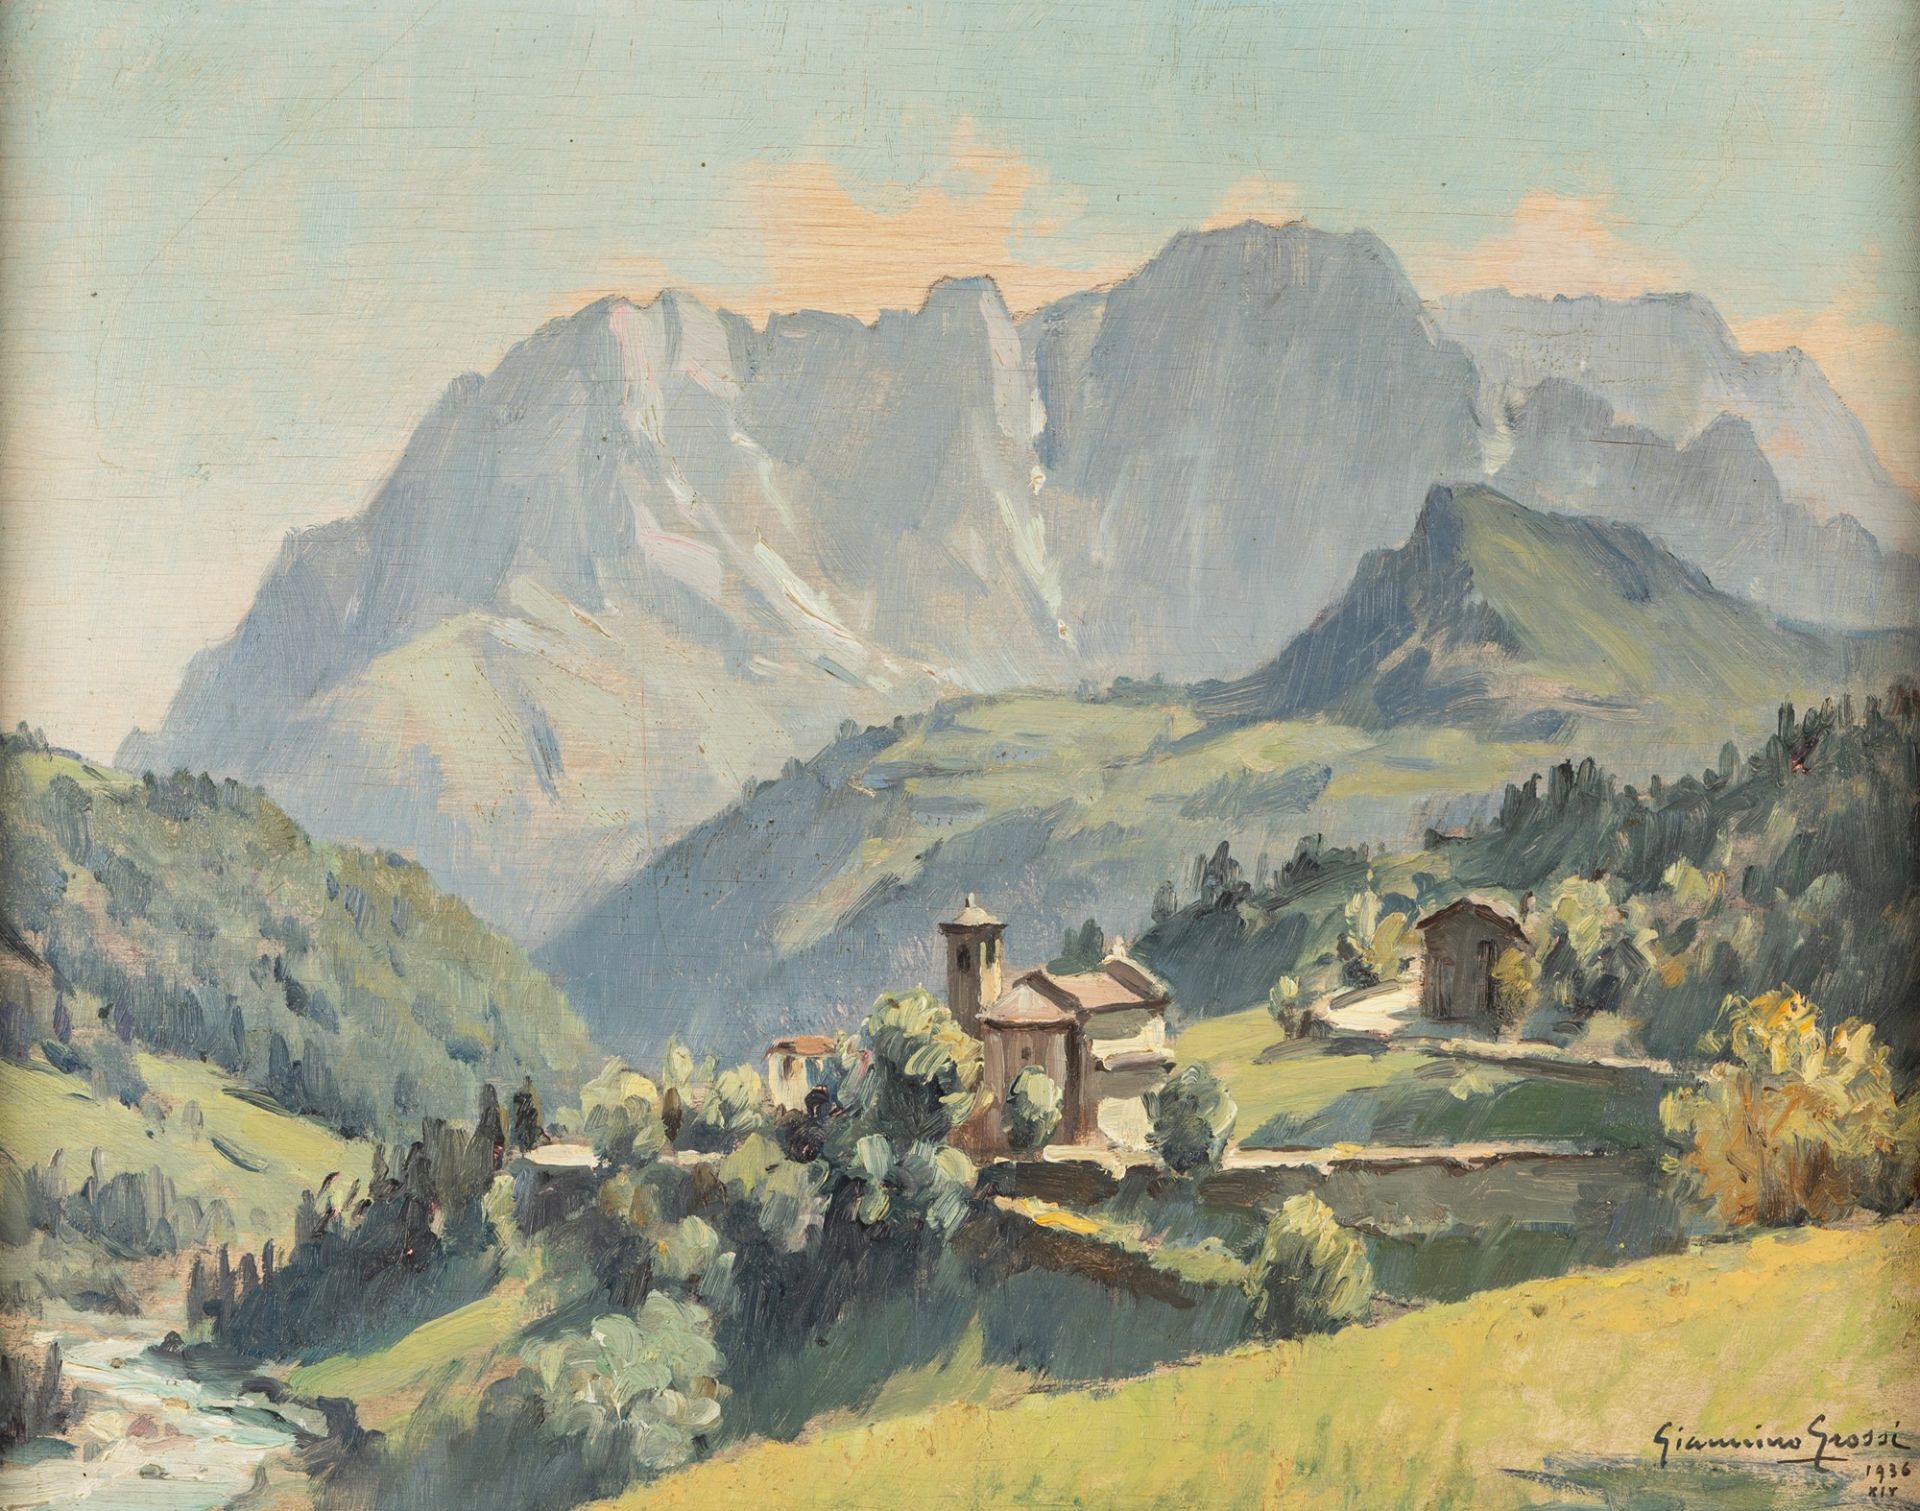 Giannino Grossi (Milano 1889-1969) - "Presolana from Sant'Andrea", 1936